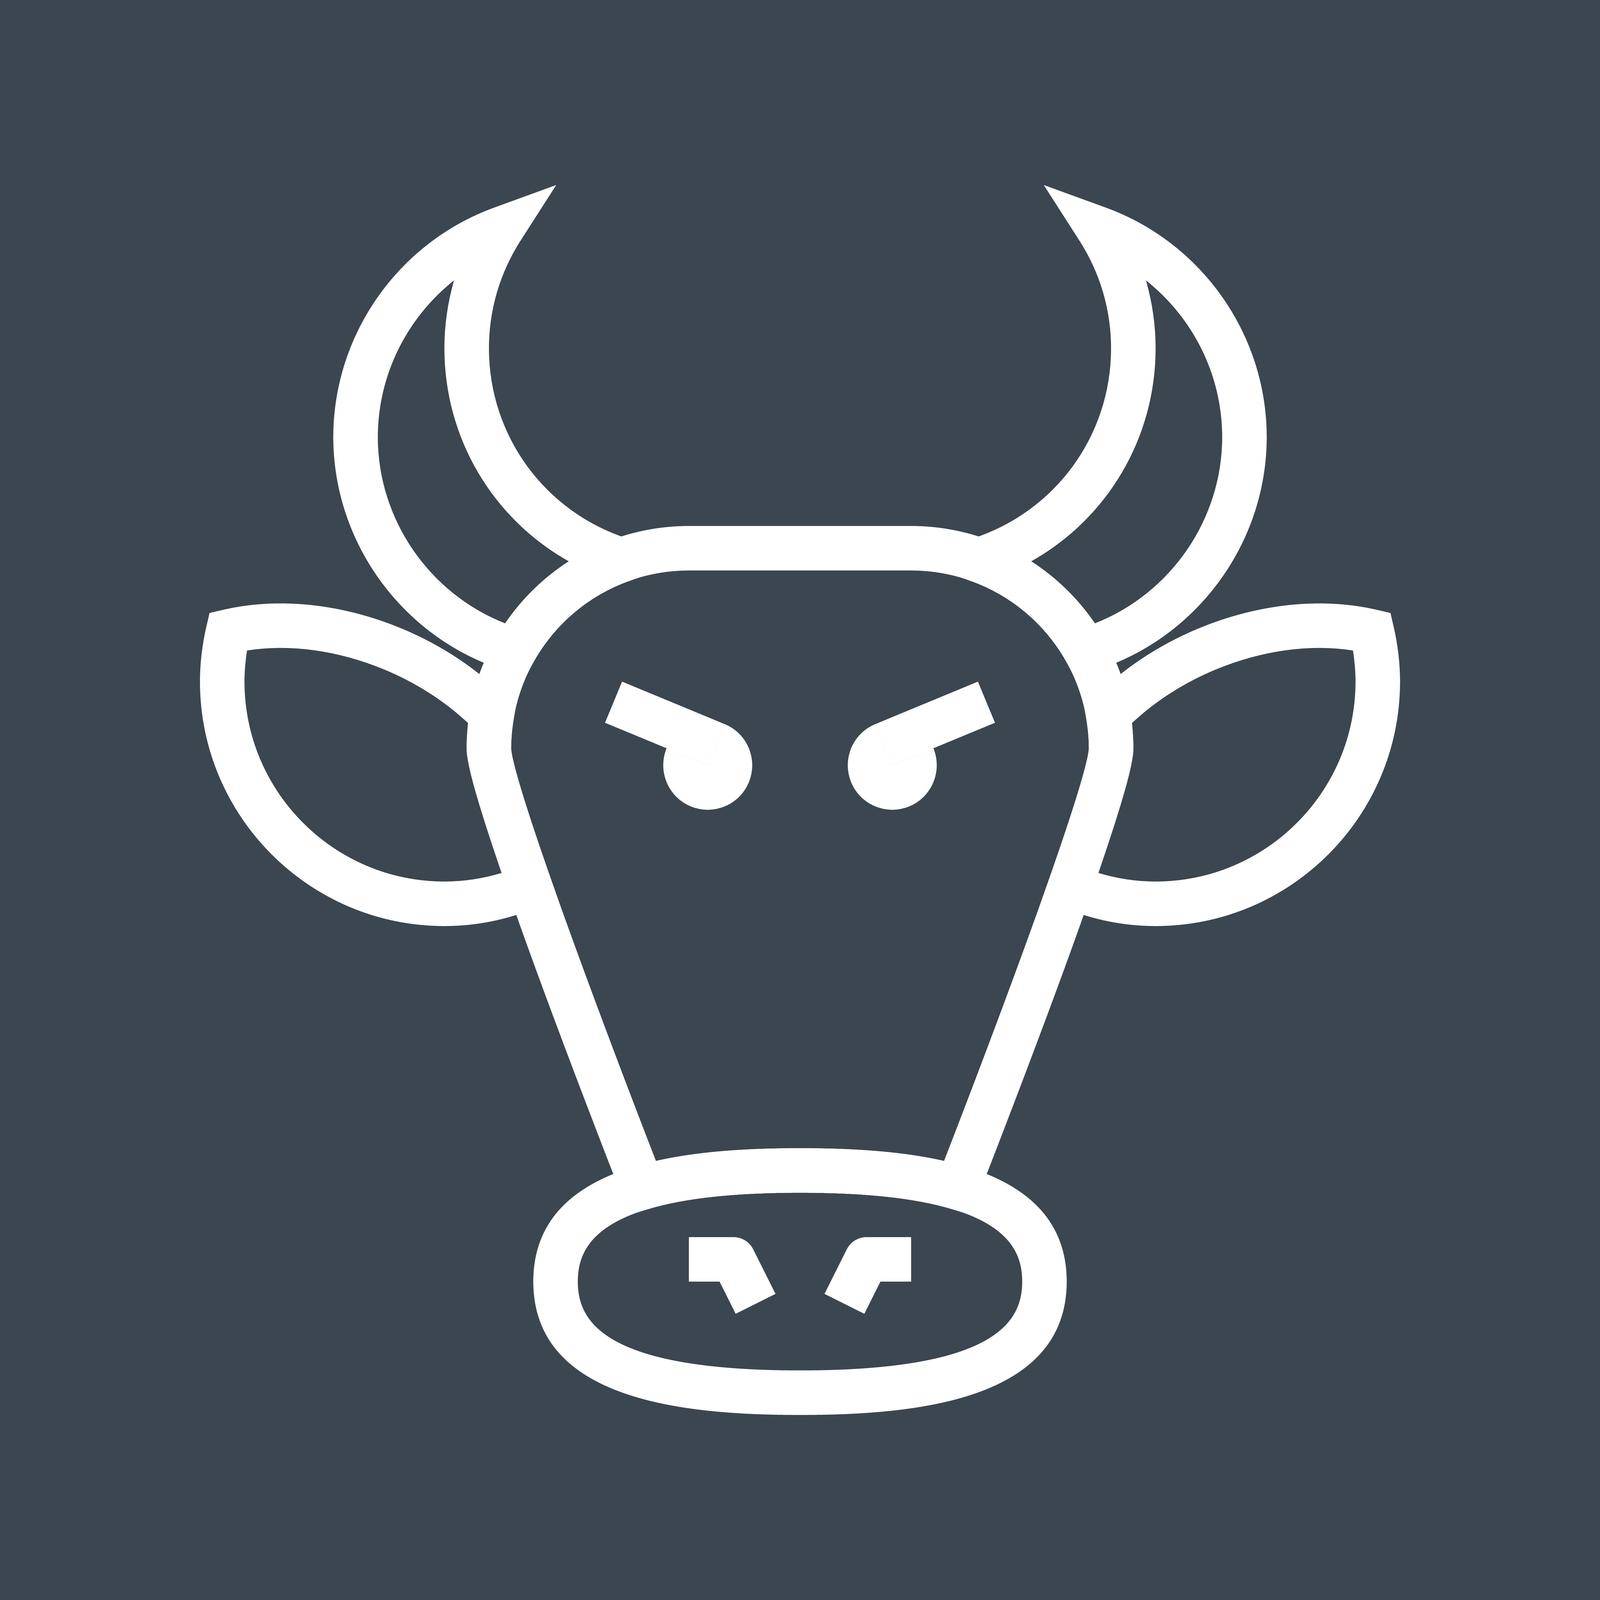 Bull Market Thin Line Vector Icon by smoki